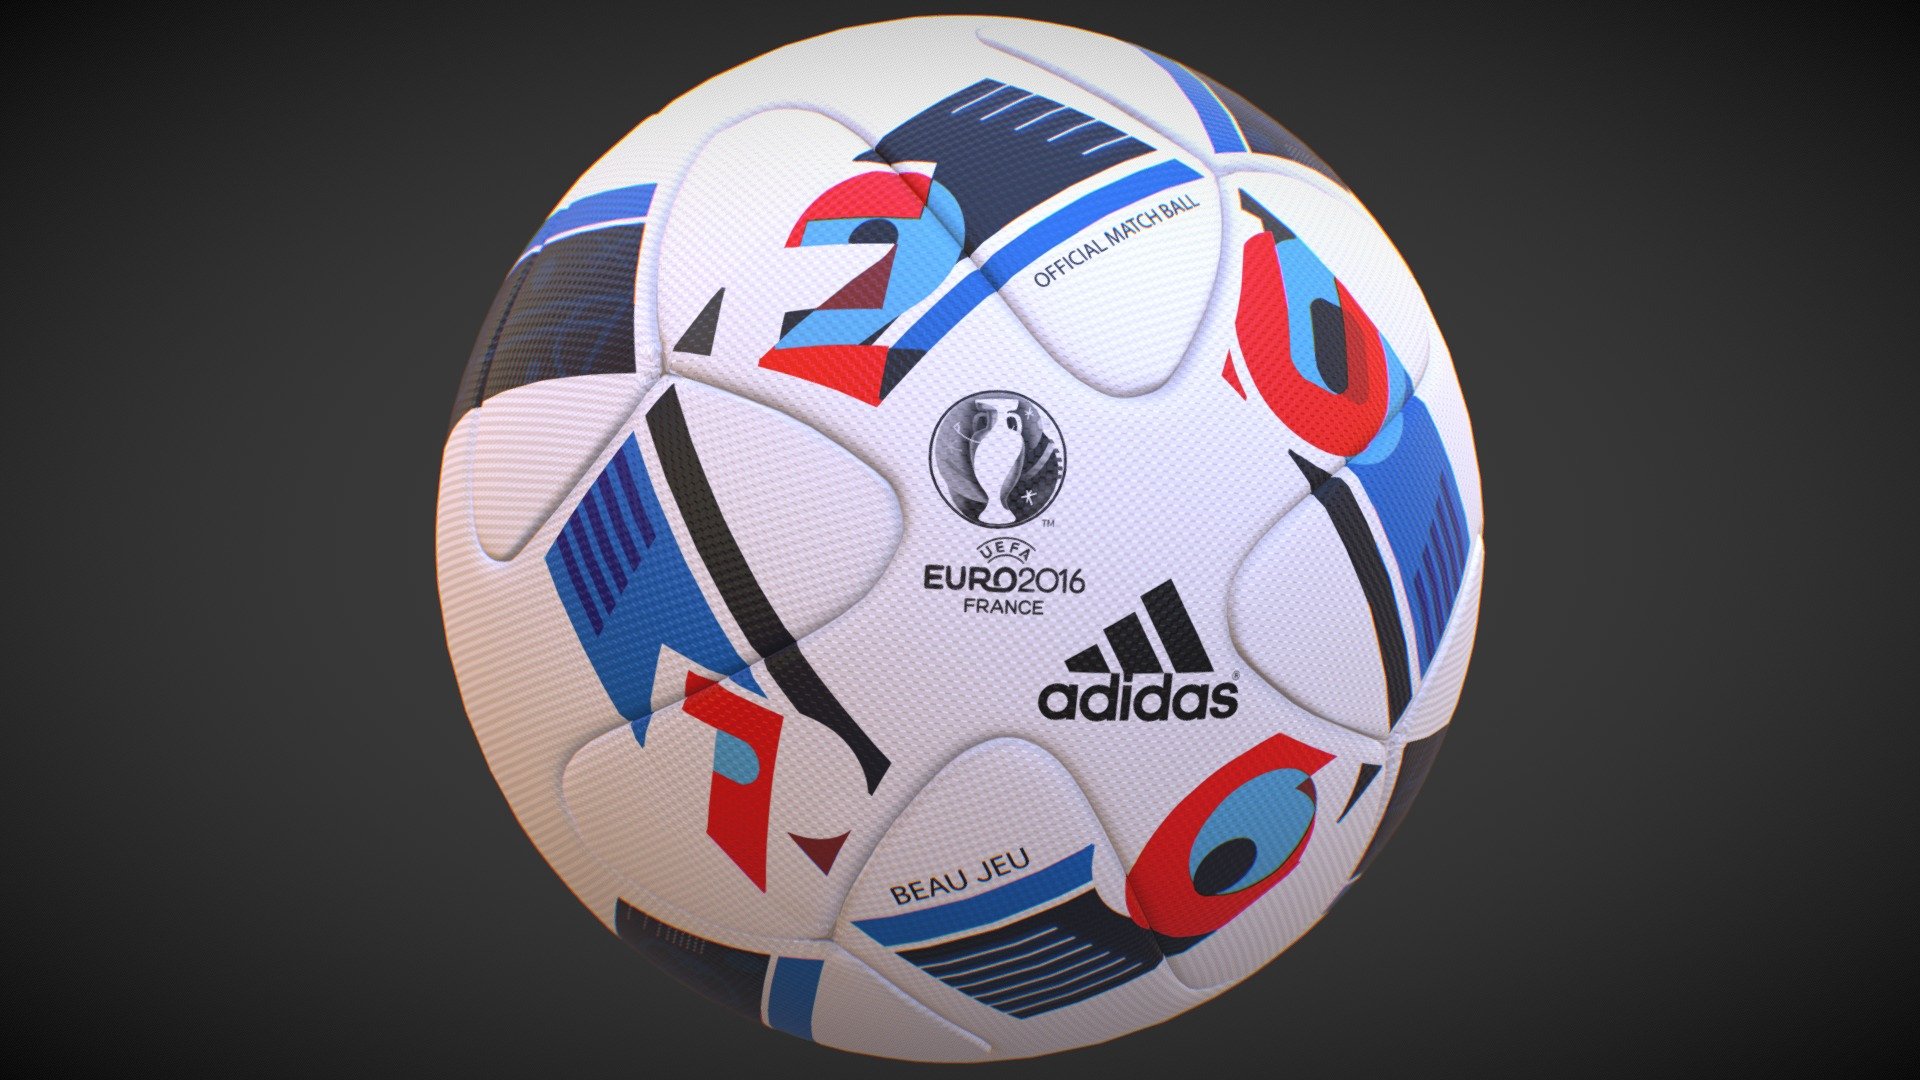 Max ball. Adidas beau jeu. Euro 2024 adidas Official Ball. Sat Max Ball.